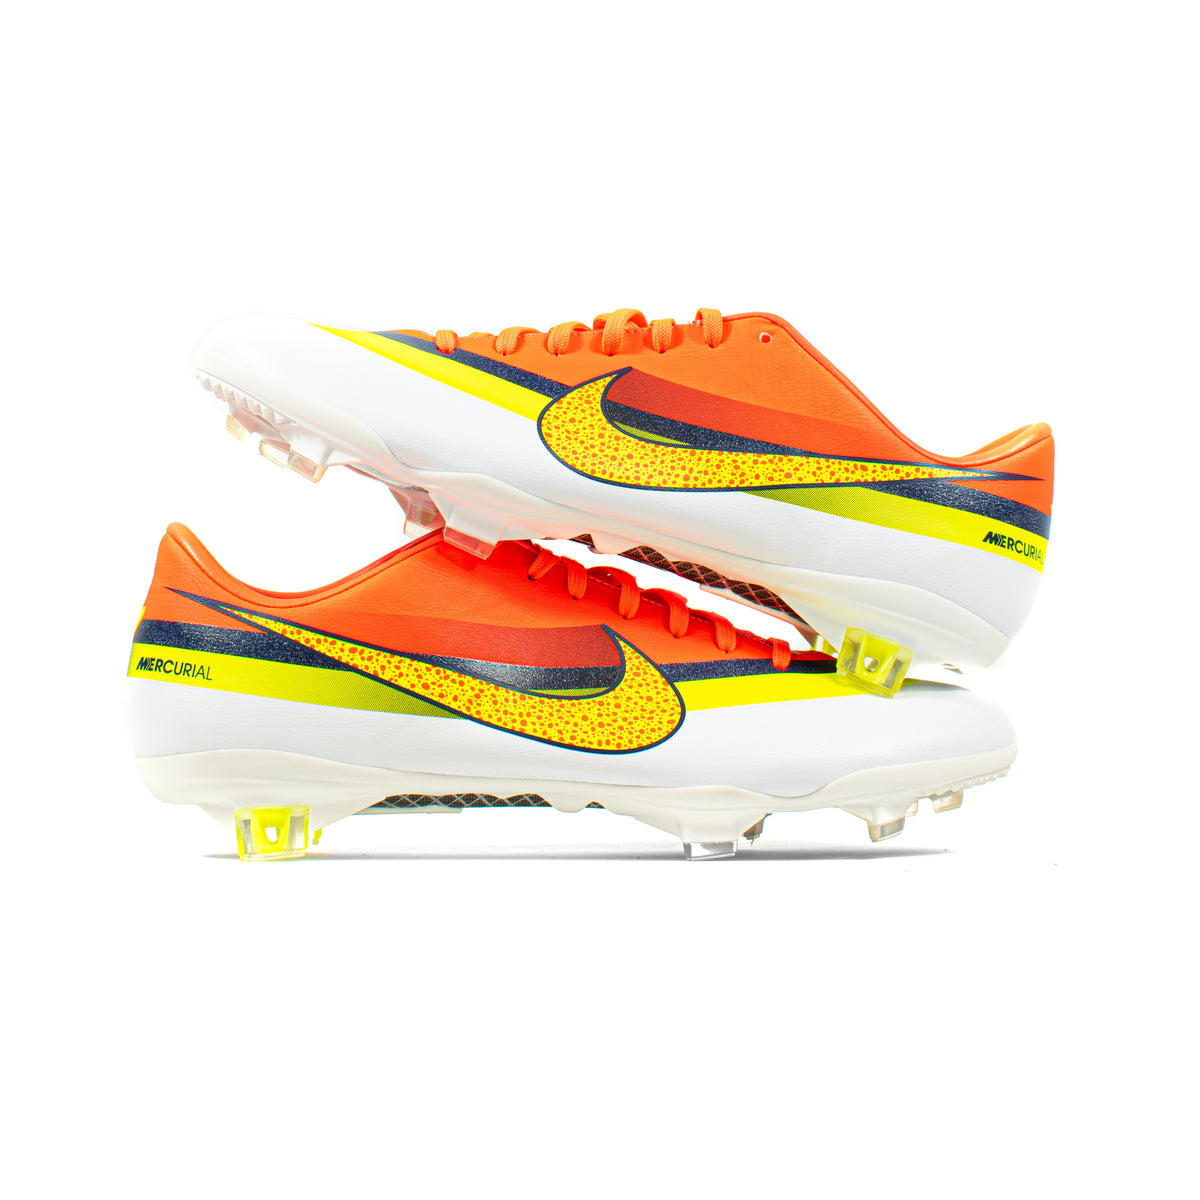 Nike Vapor IX CR7 Orange FG – Soccer Cleats